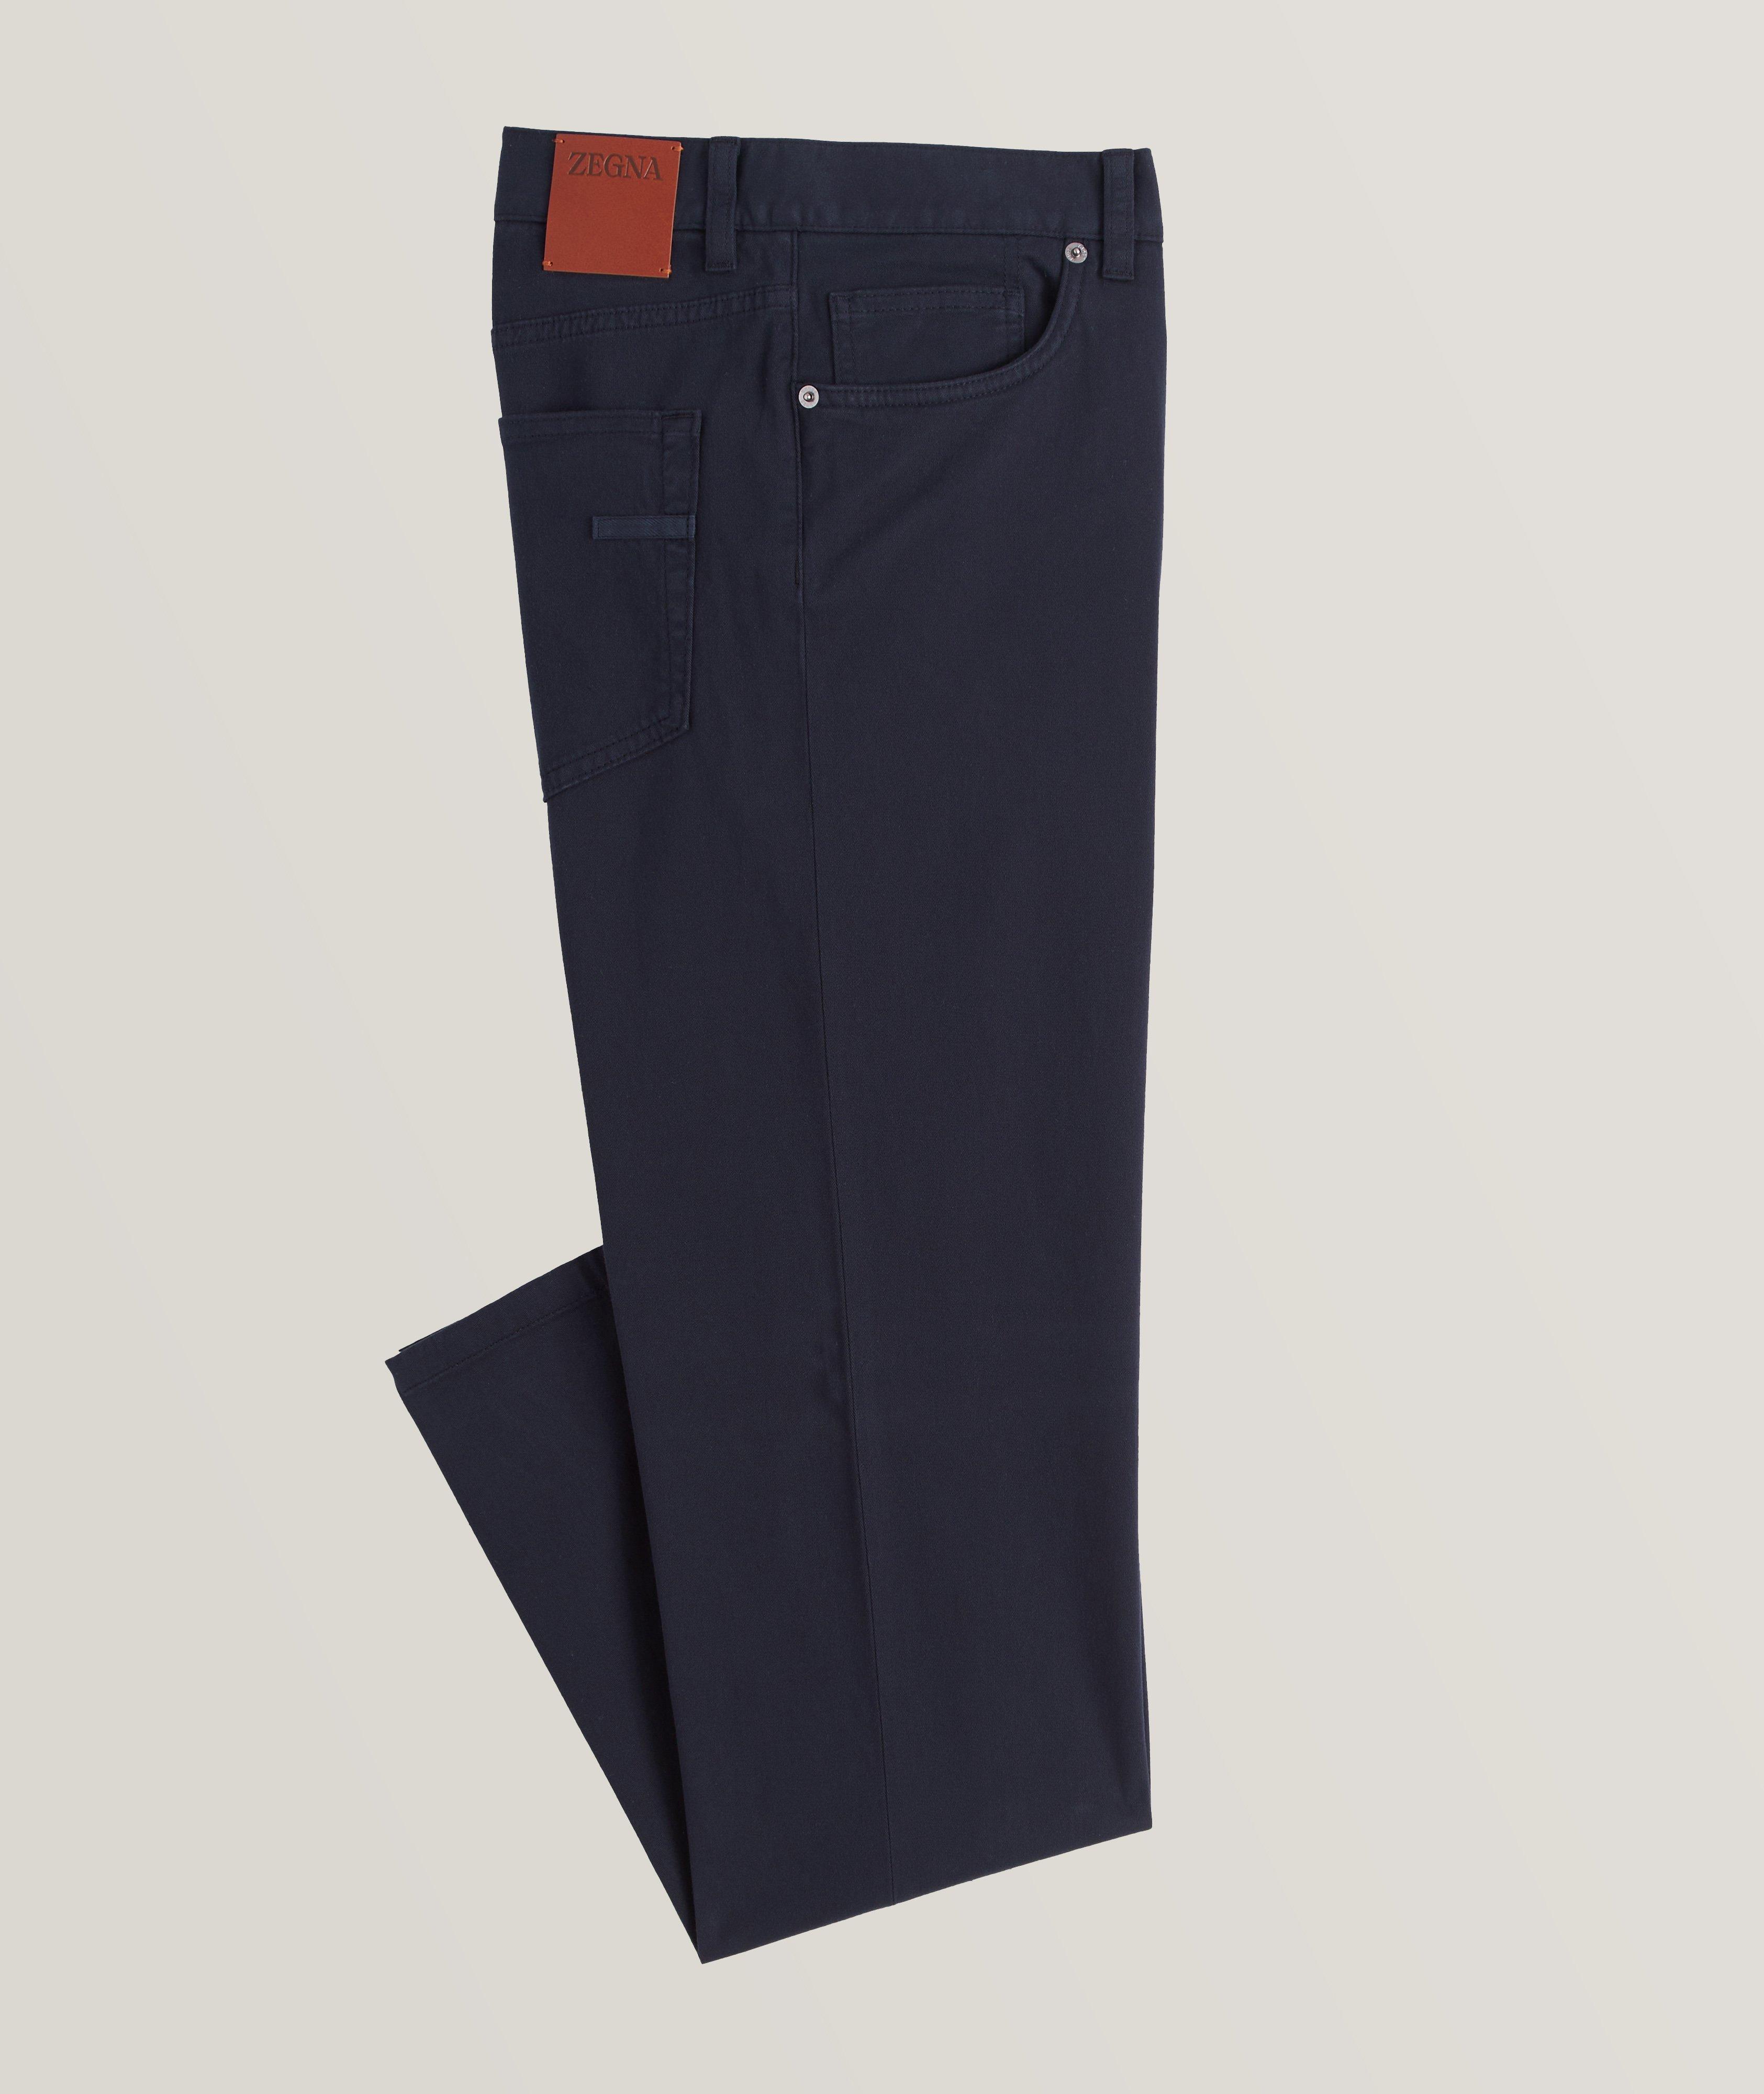 Zegna City Stretch-Cotton Five-Pocket Jeans, Pants